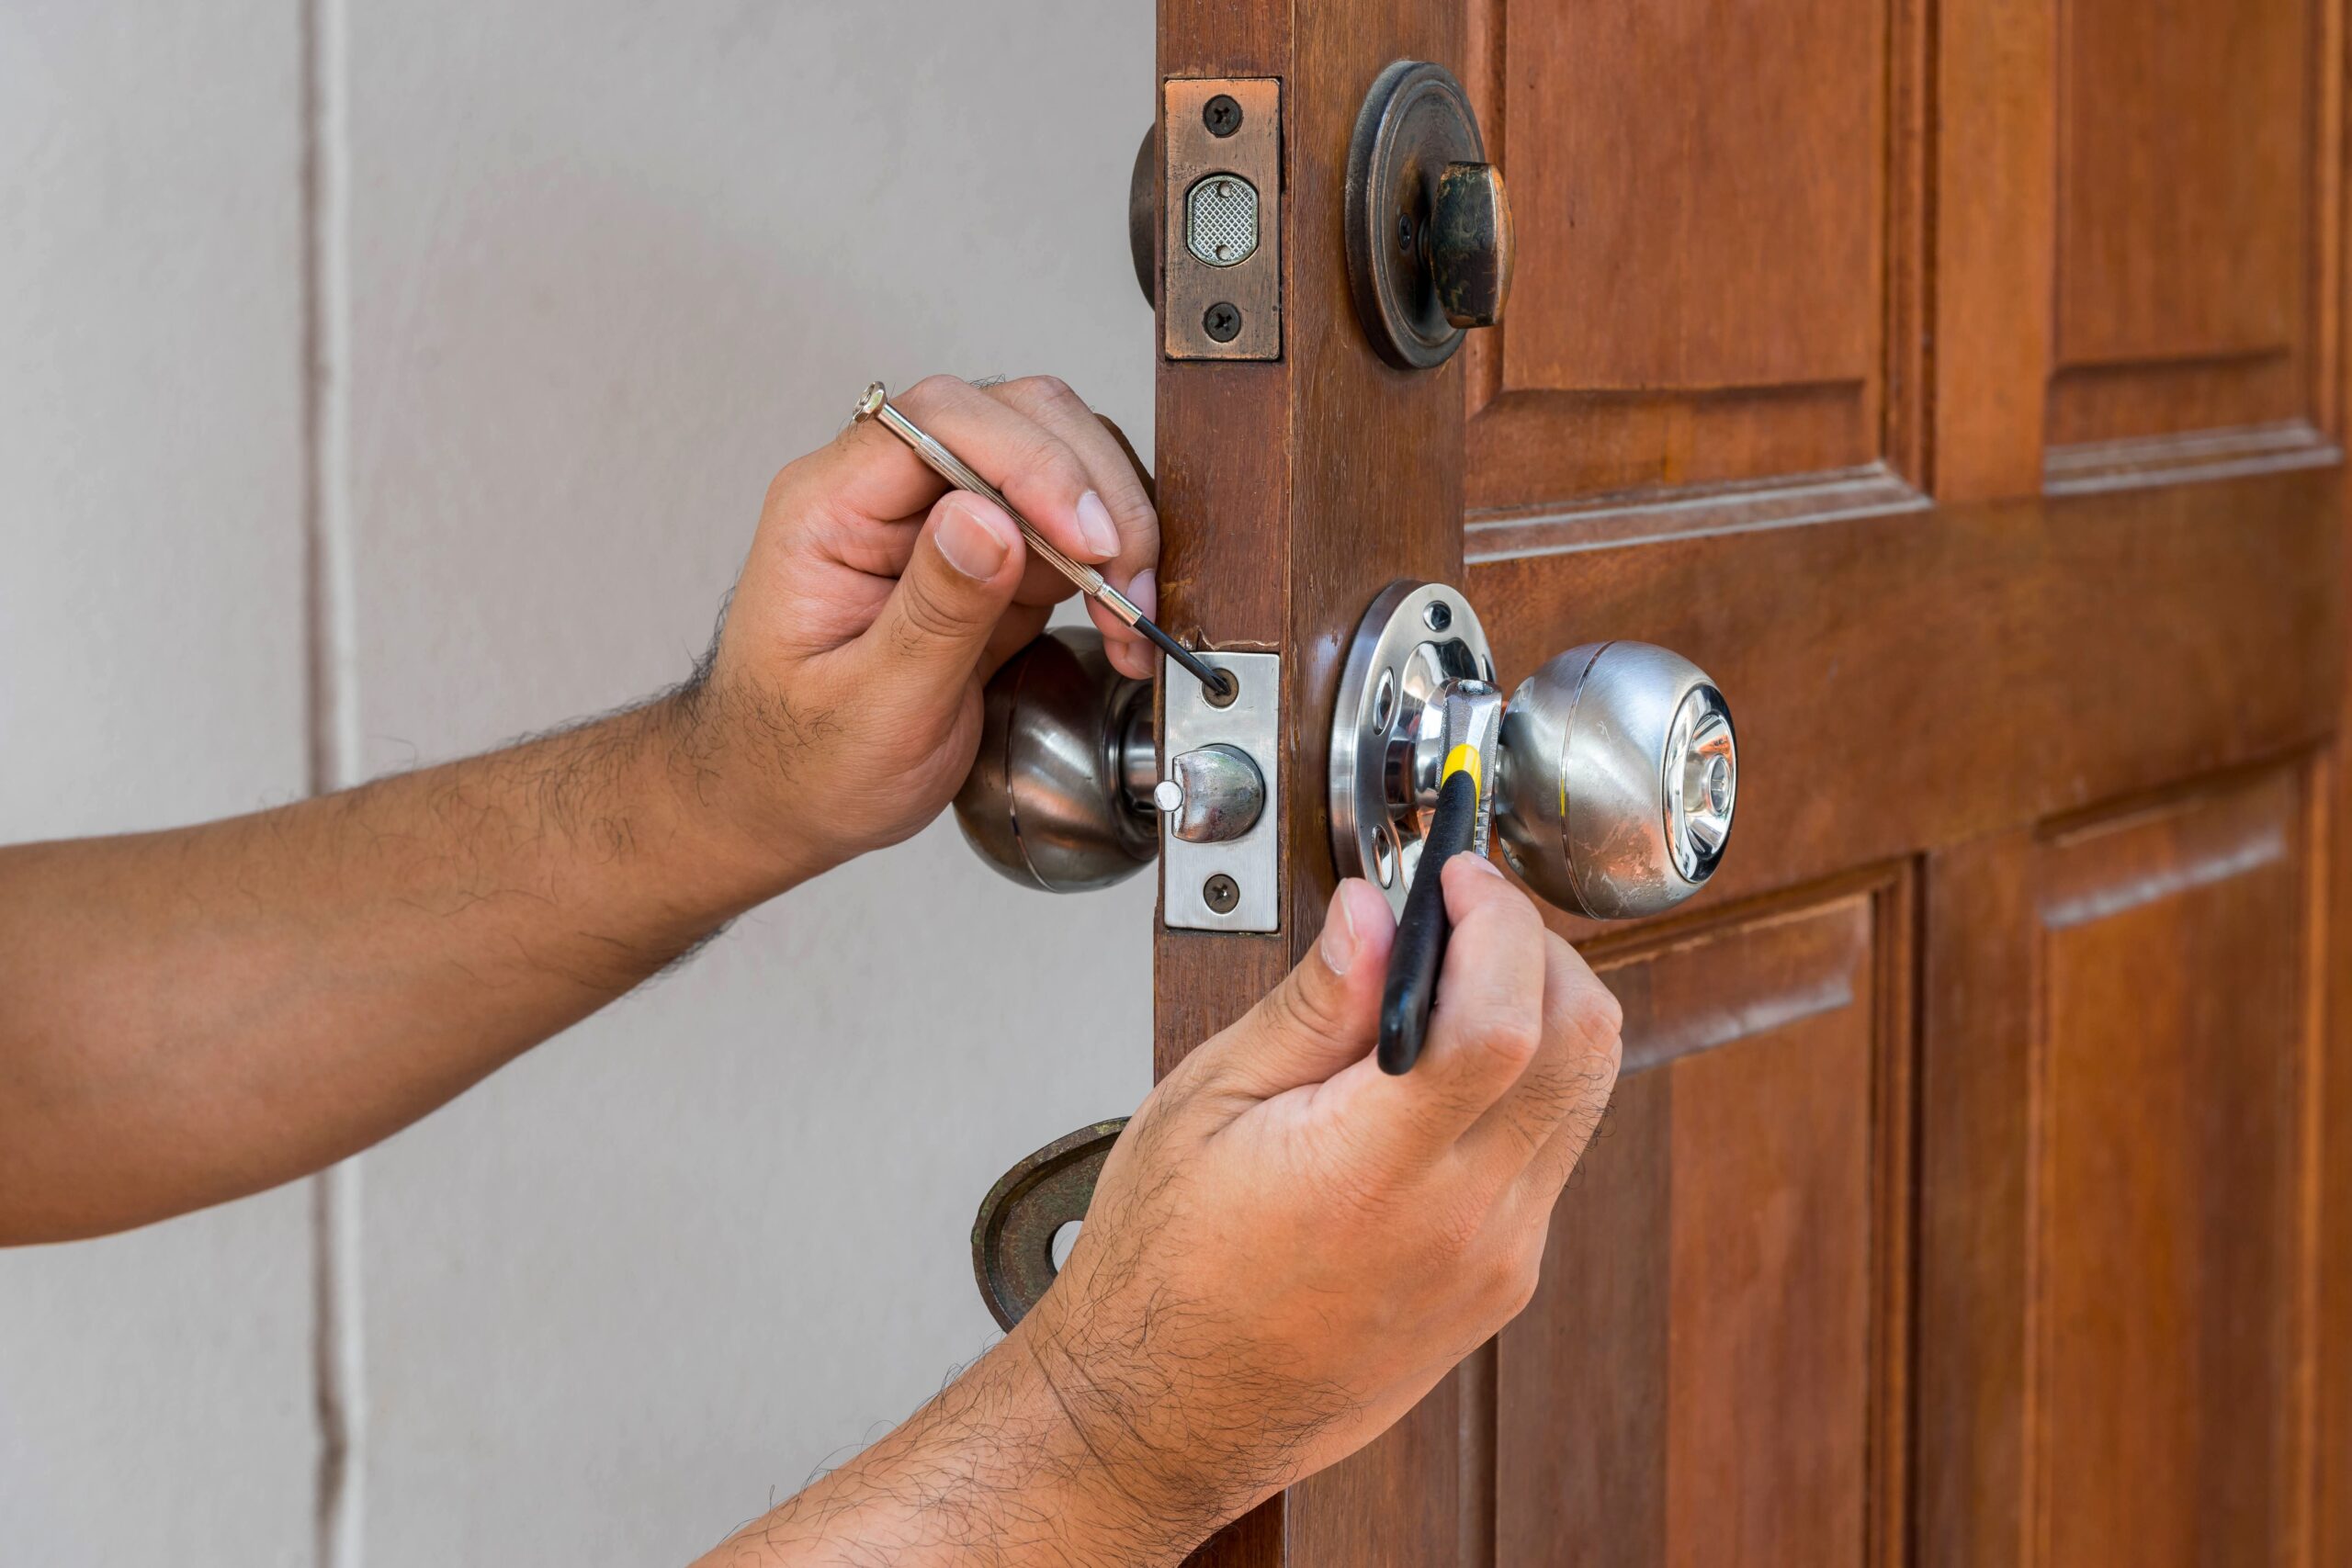 Person's hands installing doorknob and hardware.